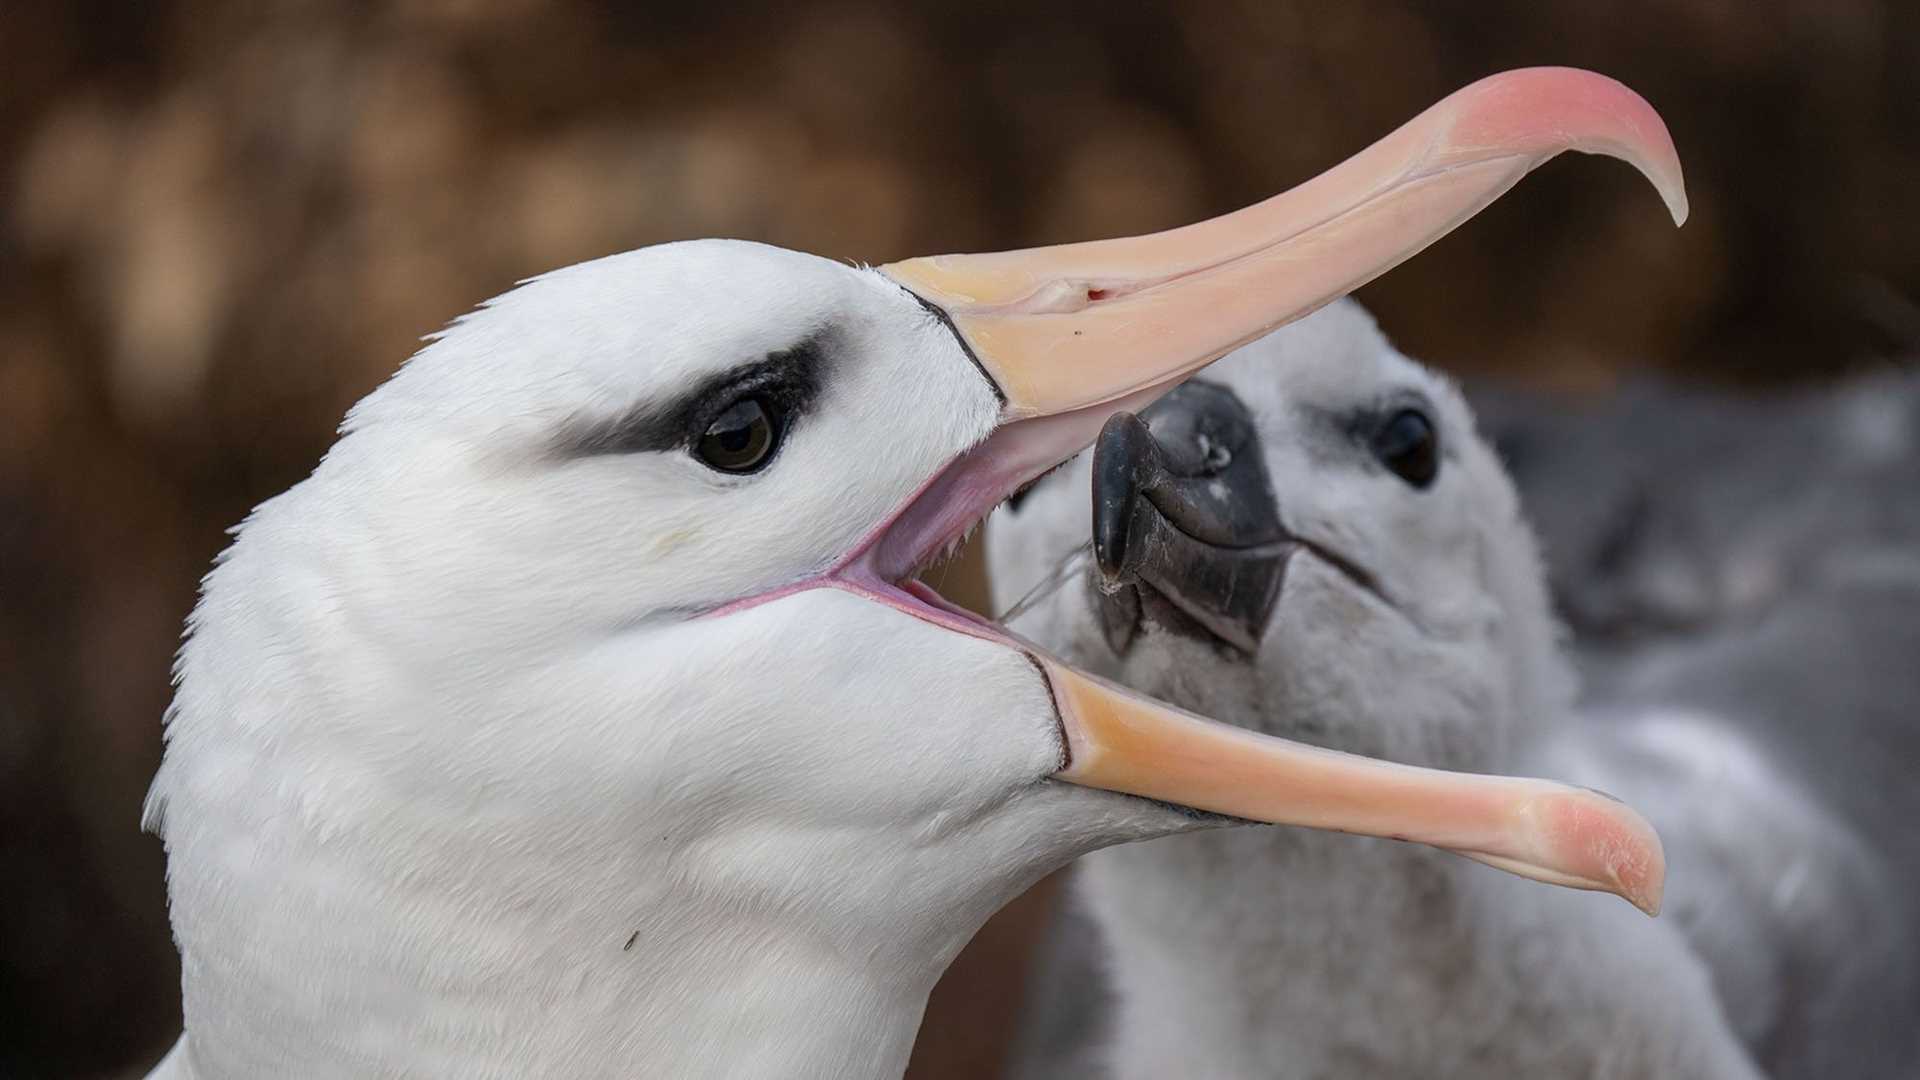 albatross feeding its chick